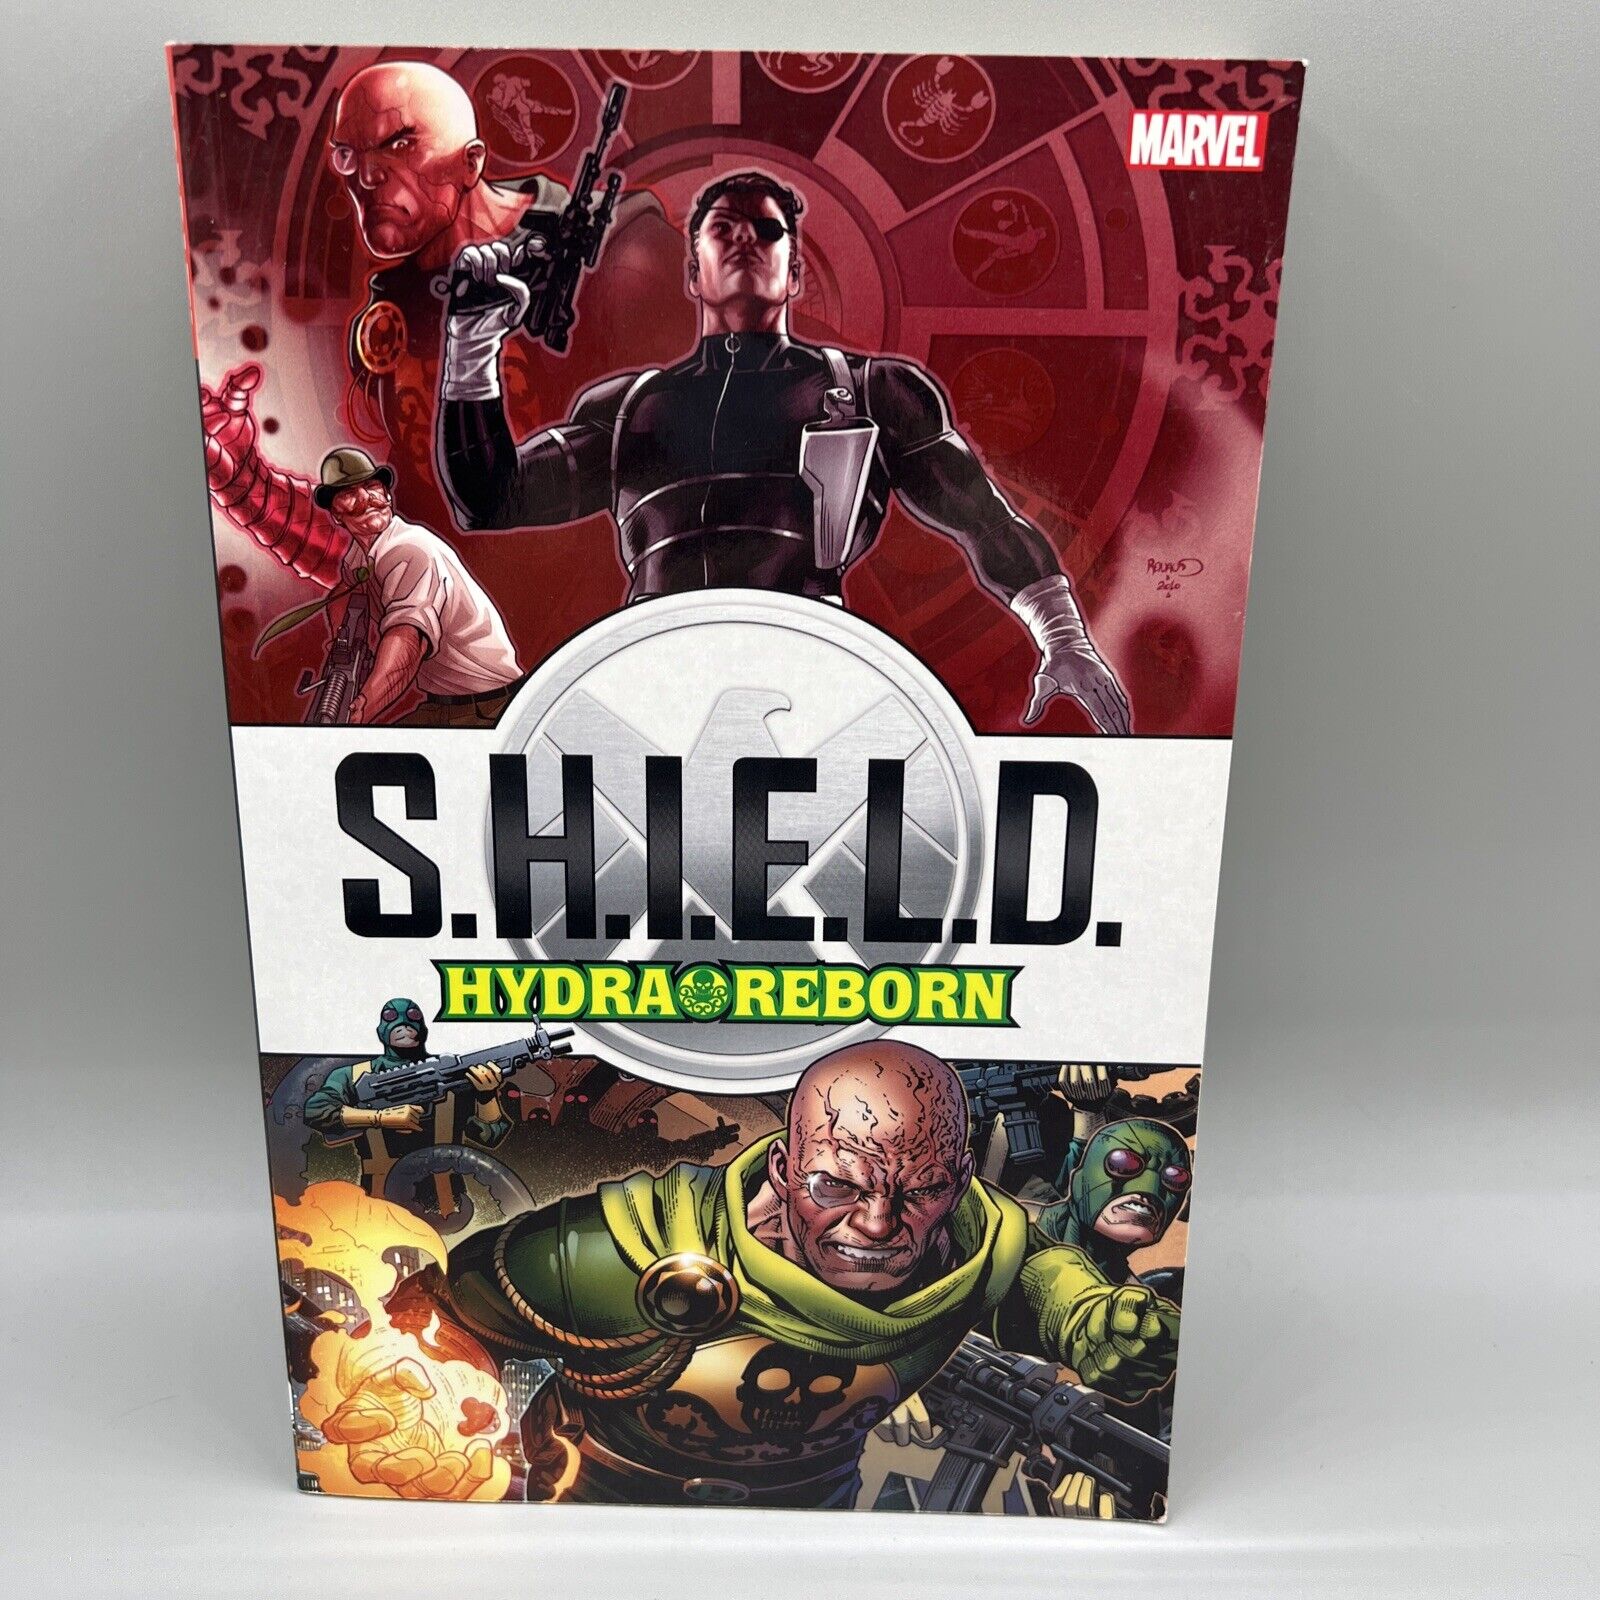 S.H.I.E.L.D.: HYDRA REBORN By Scott Lobdell & Eliot R. Brown